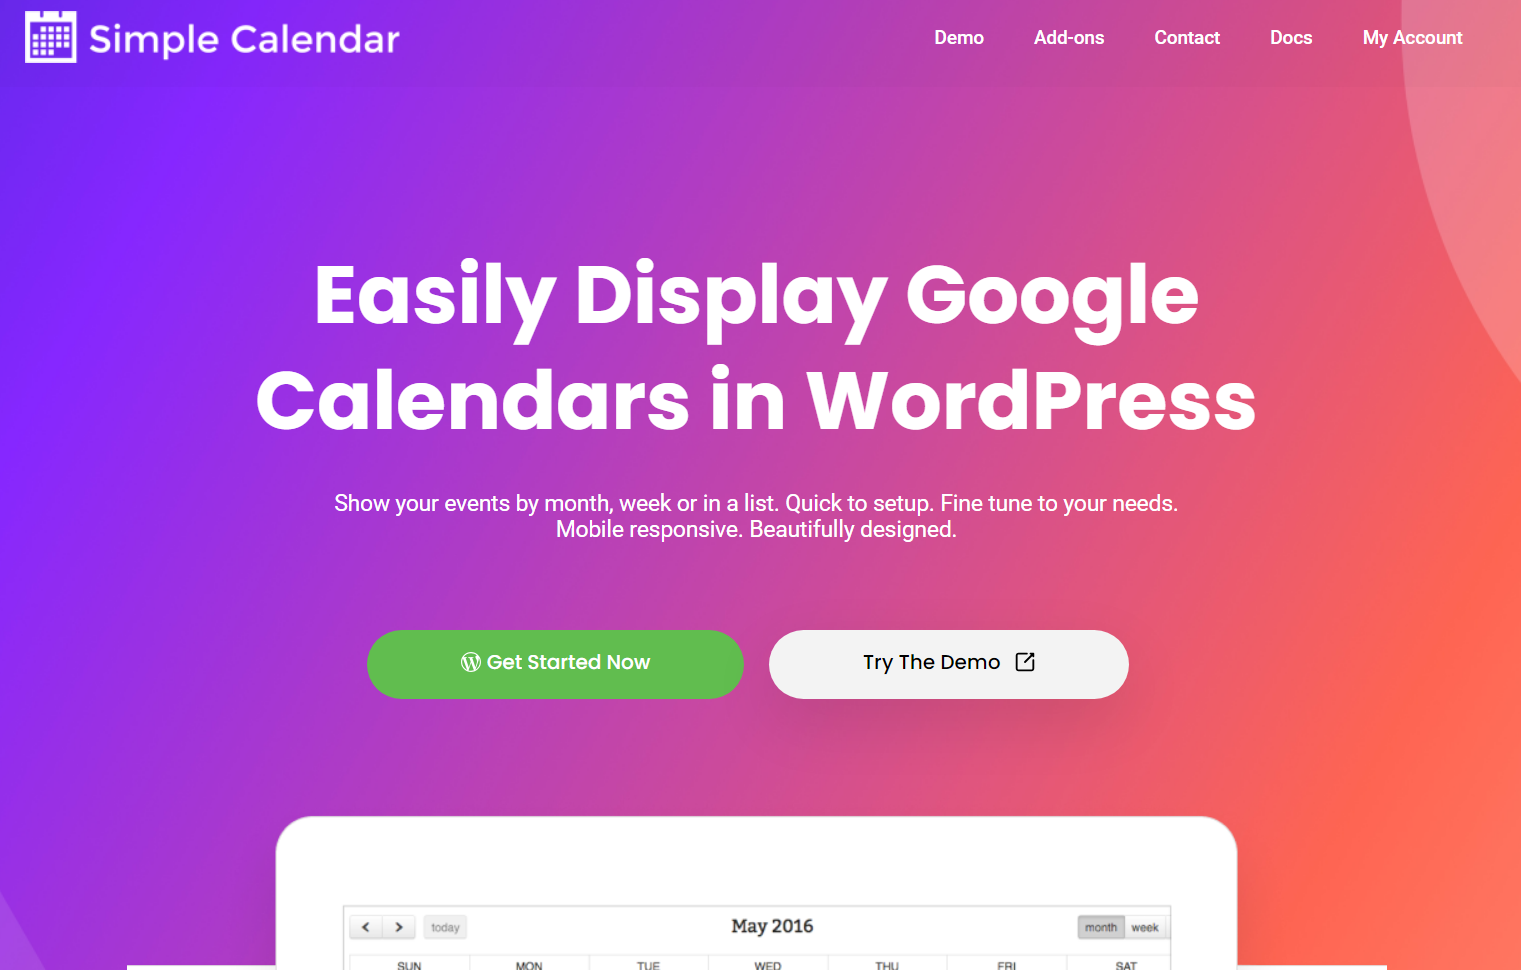 Simple Calendar PRO (Full Calendar + Google Calendar Pro Addons)